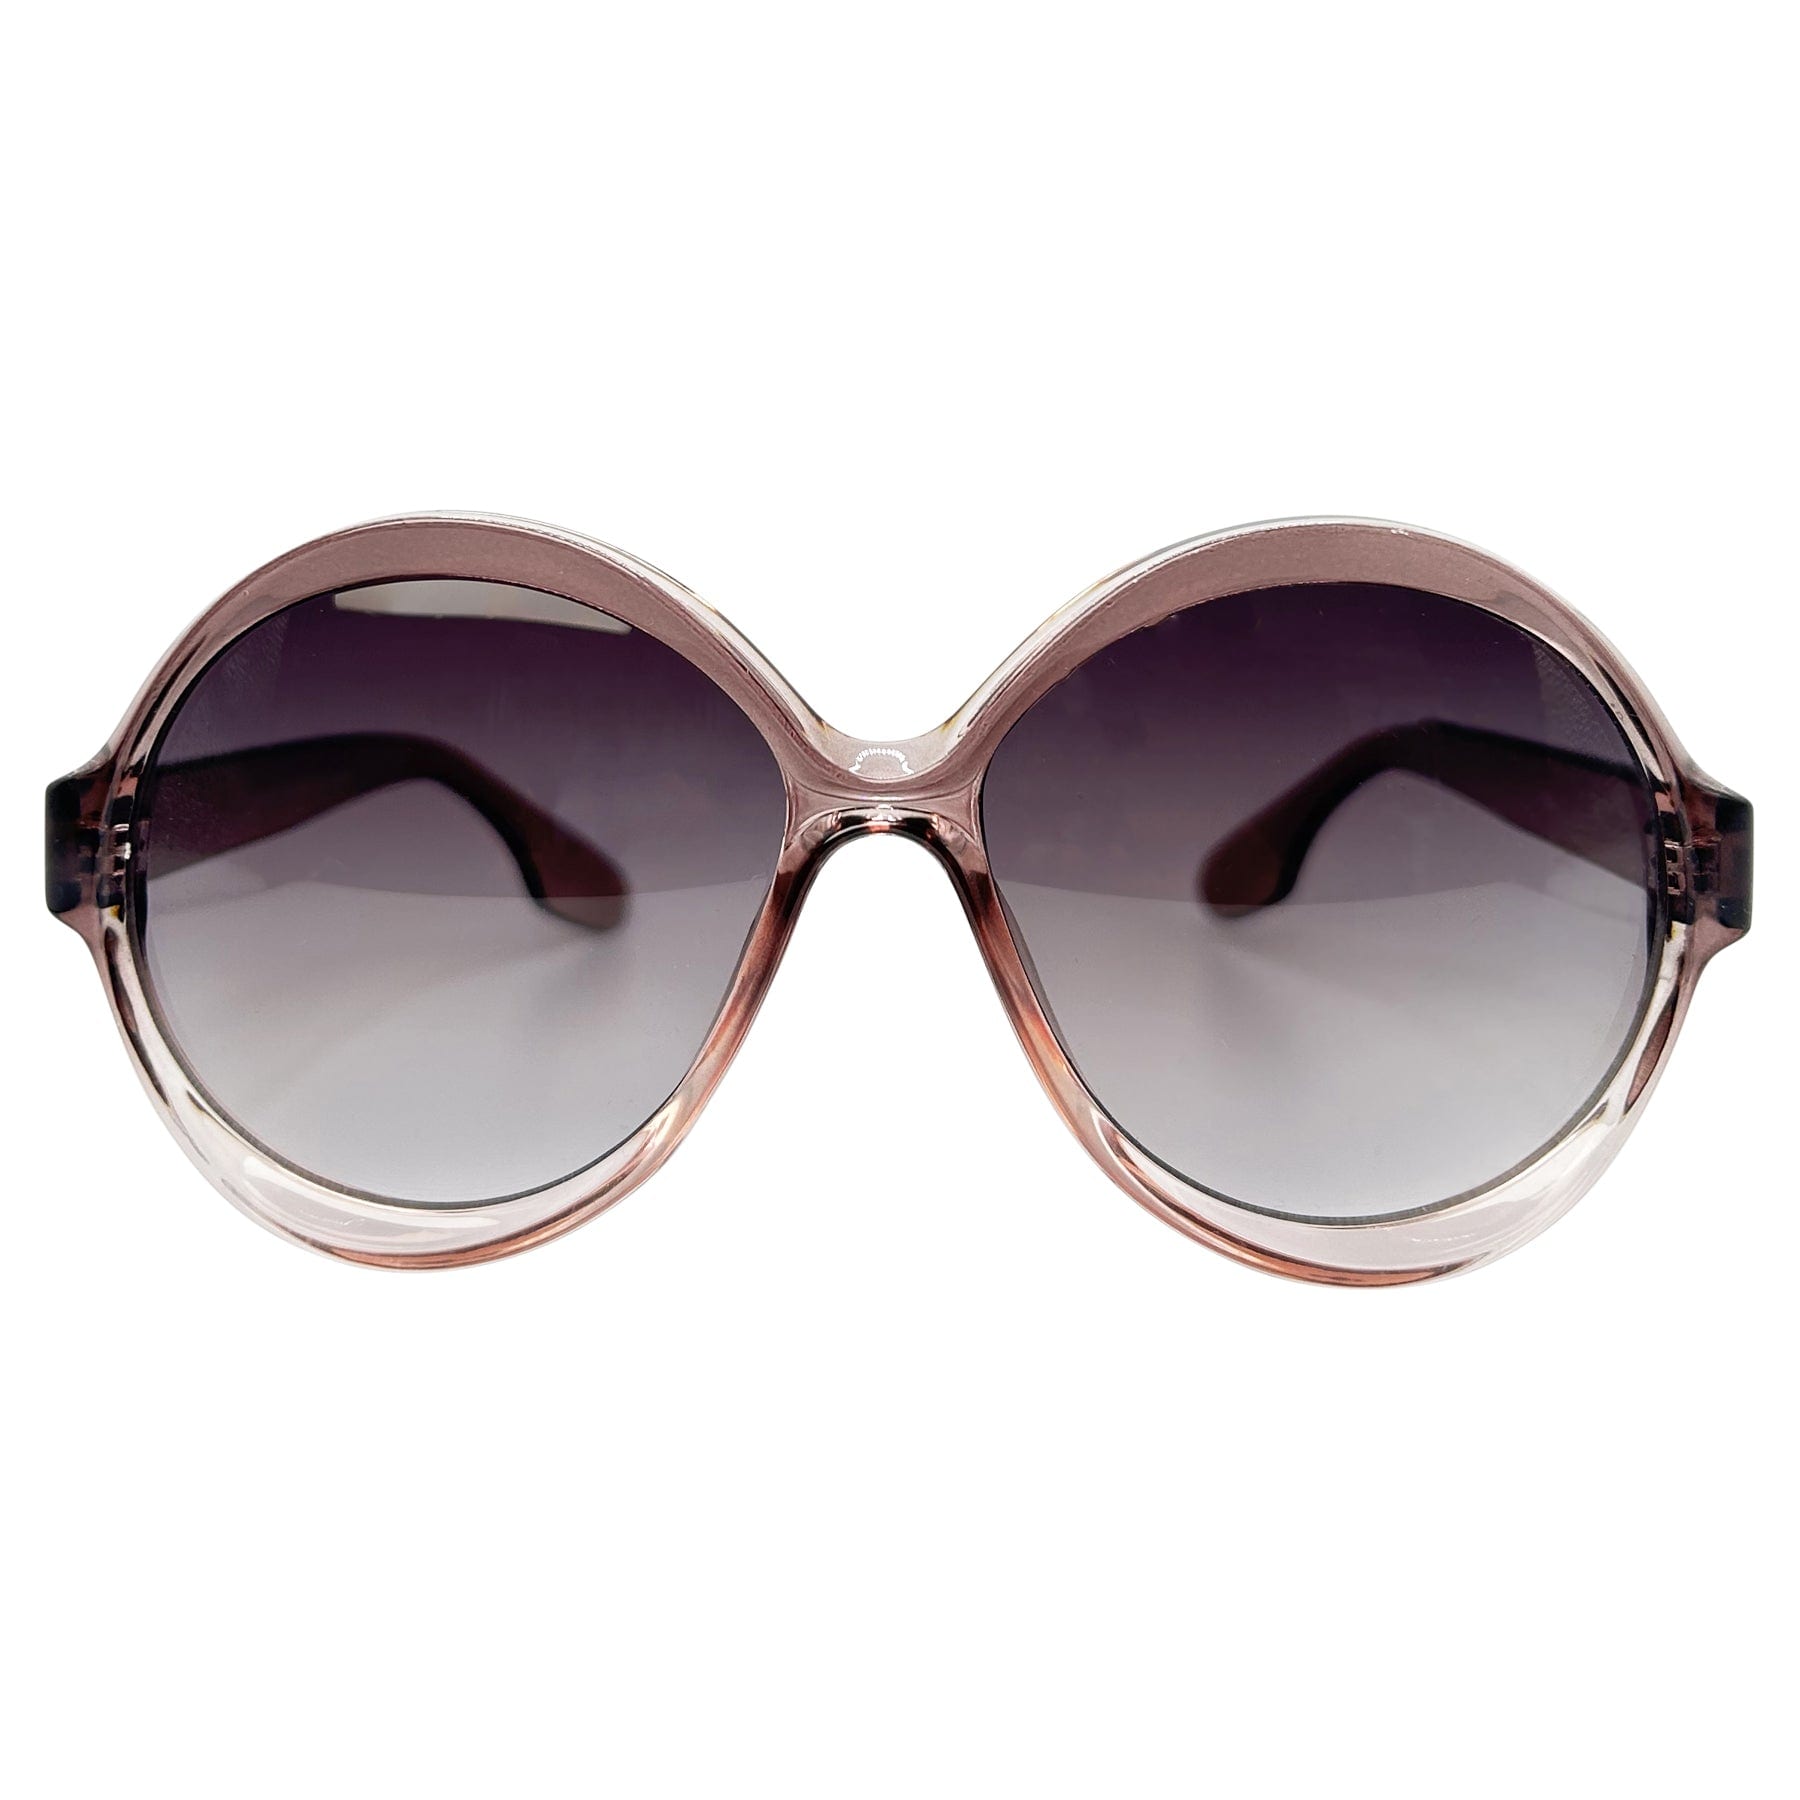 70s inspired boho chic big sunglasses 